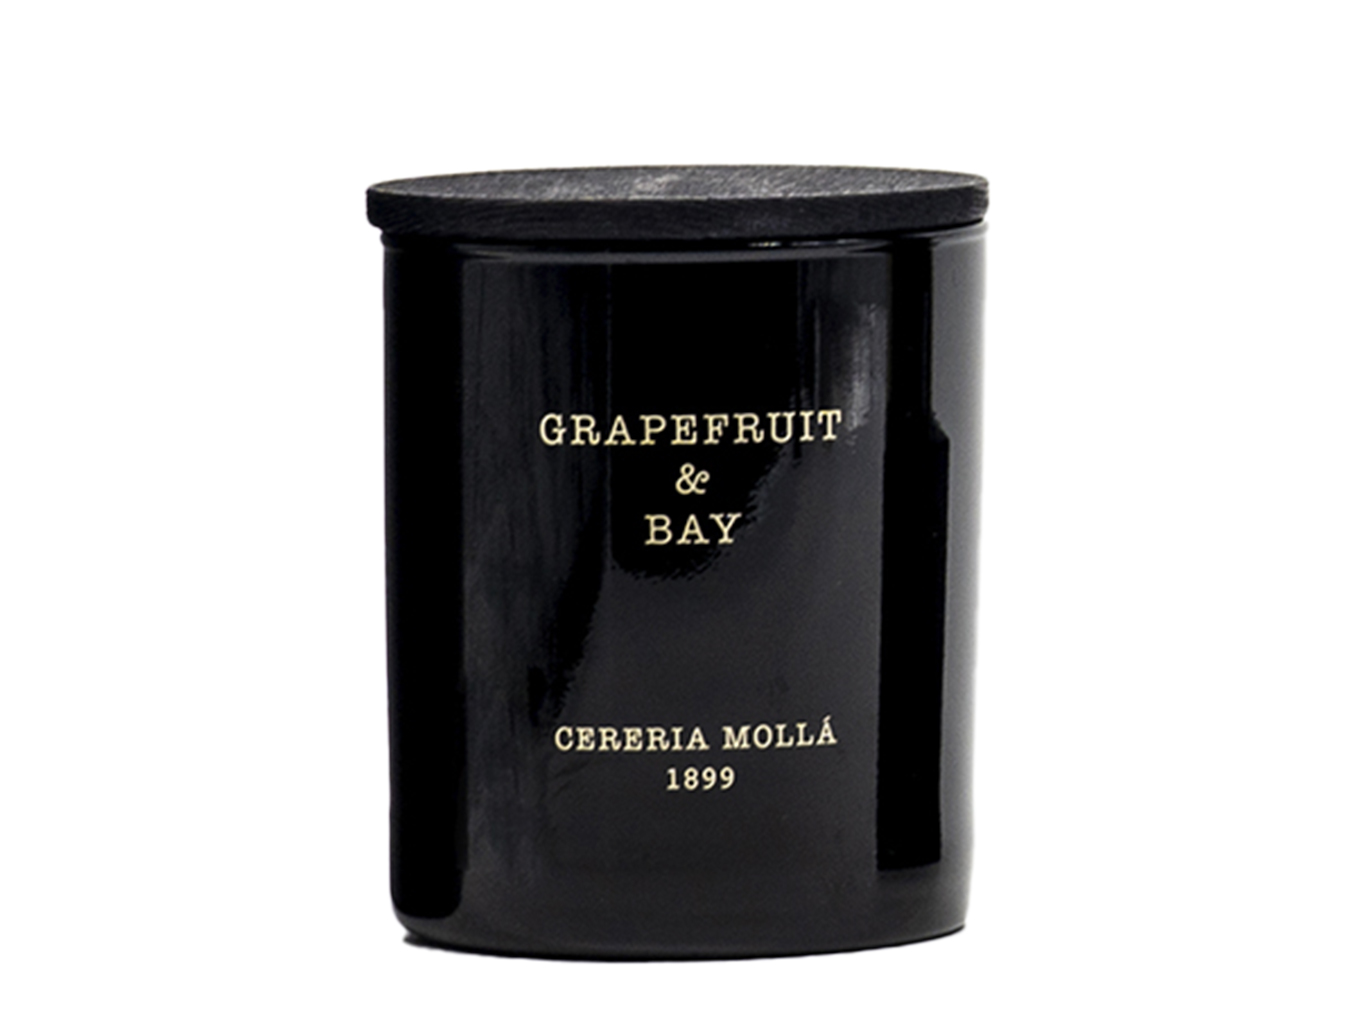 Grapefruit & Bay 600g - Cereria Molla - Marina Vernicos Collection